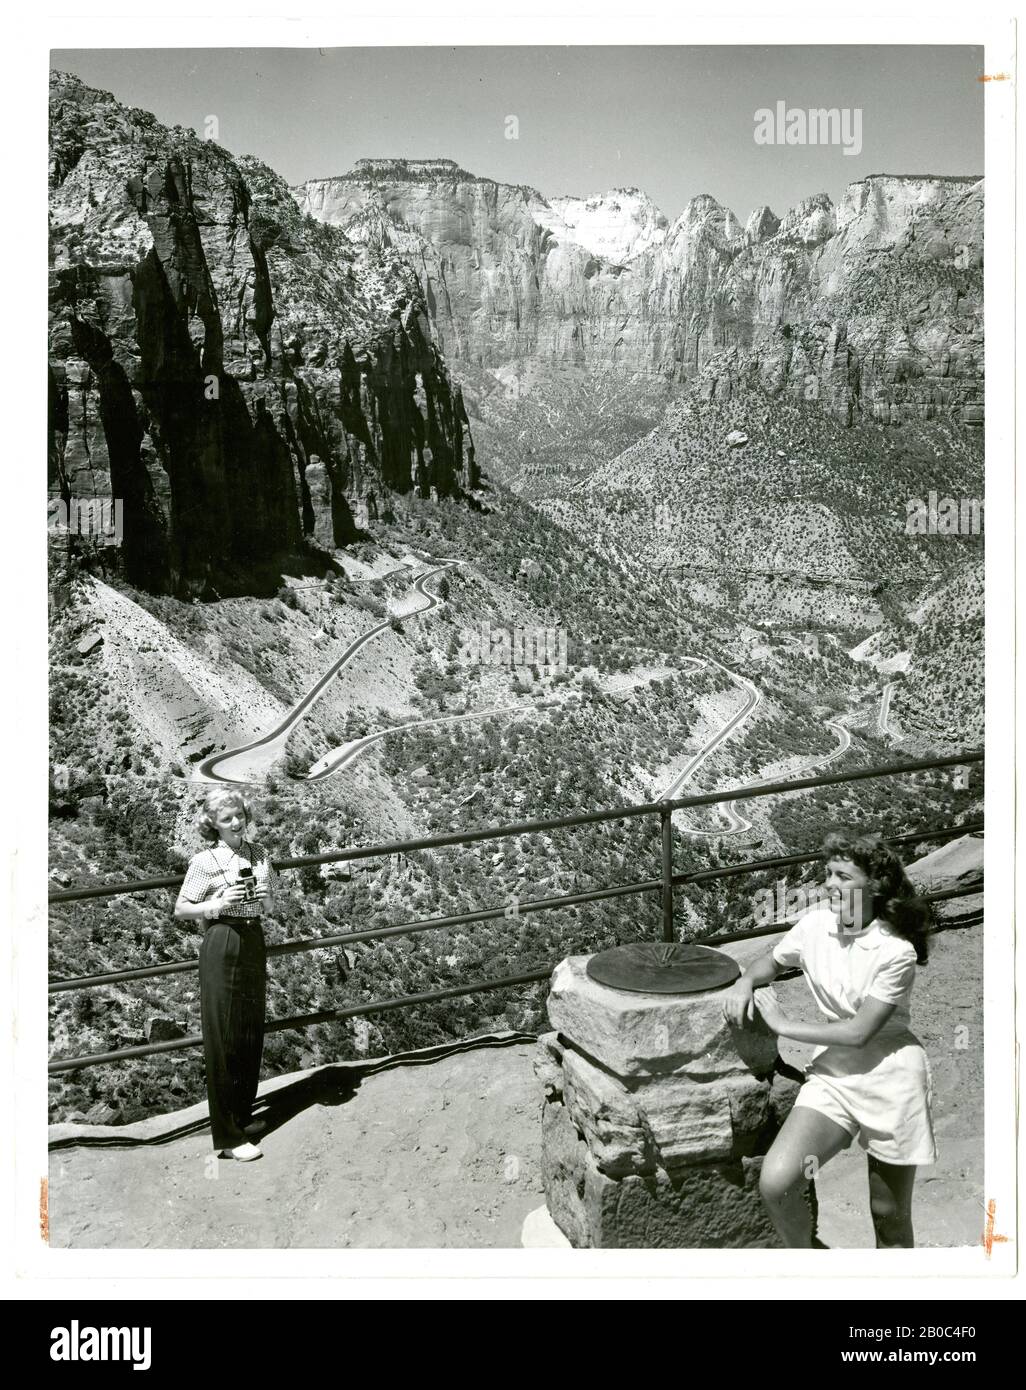 Union Pacific Railroad Photographer, Zion-Mount Carmel Highway, Zion National Park, Utah, 5/8/1949, gelatin silver print, 9 7/8x 7 1/2 in. (25.08x 19.05 cm Stock Photo